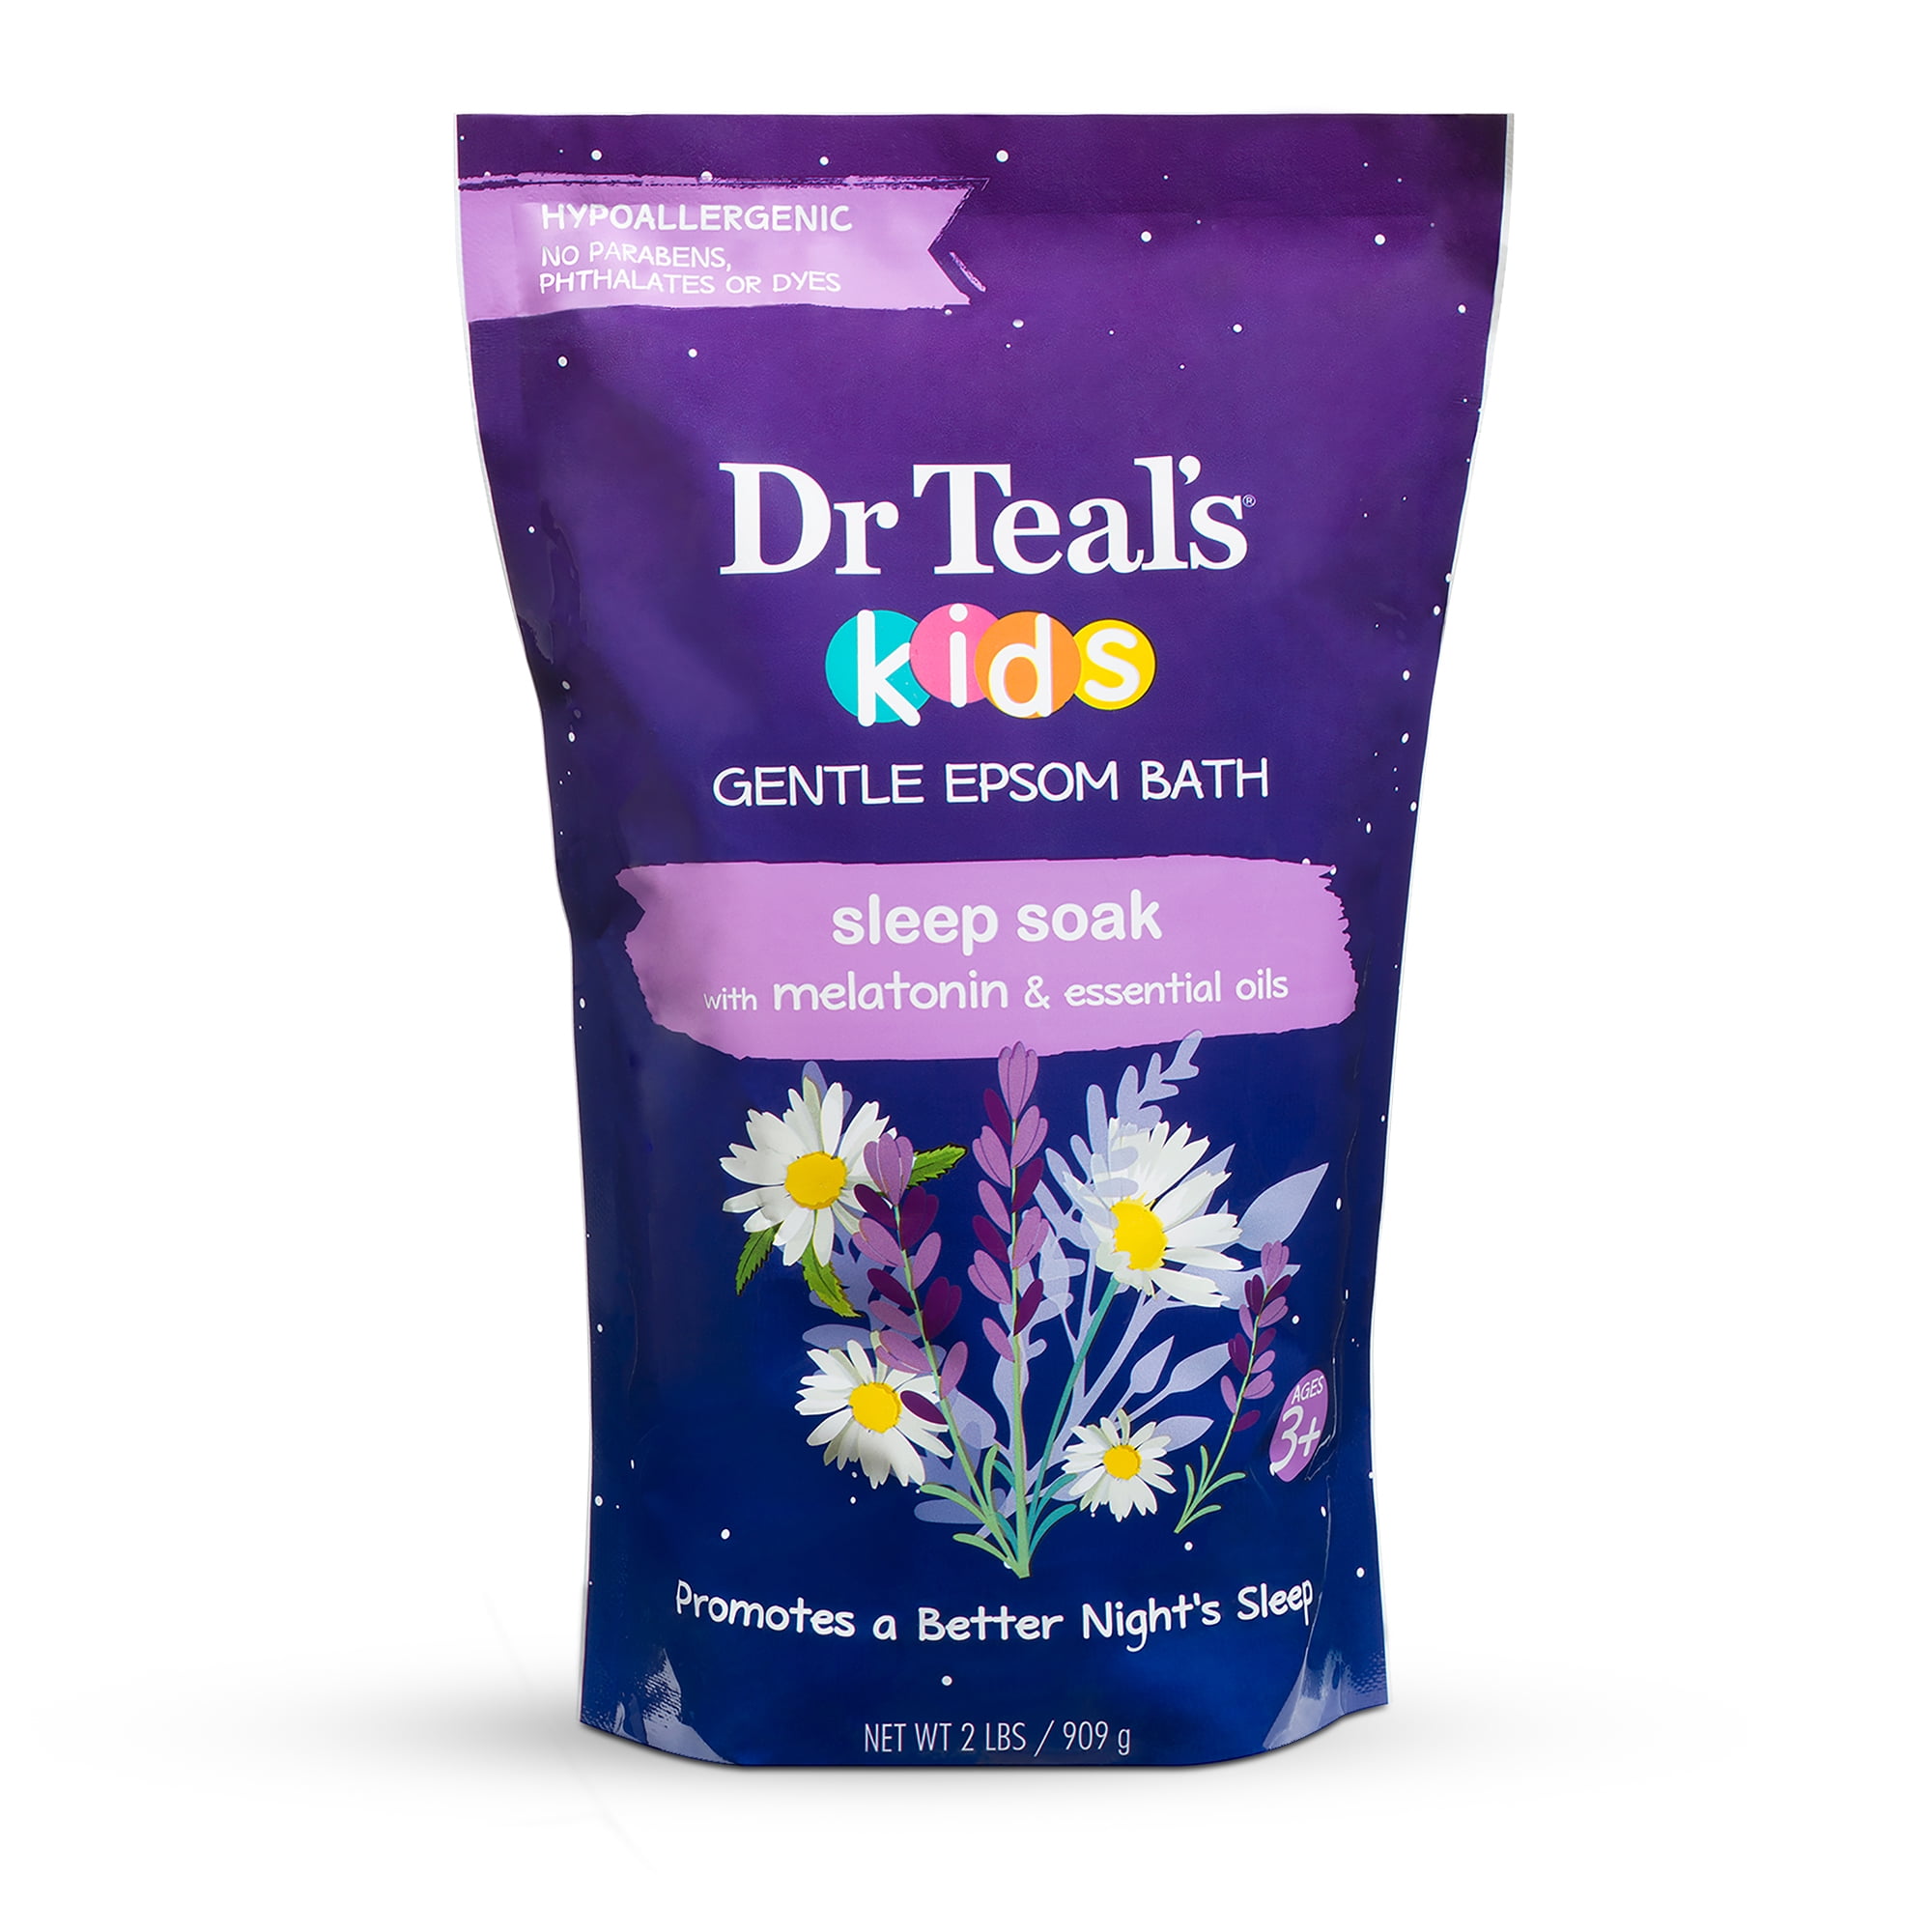 Dr Teal's Kids Gentle Epsom Salt, Sleep Soak with Melatonin, 2lbs